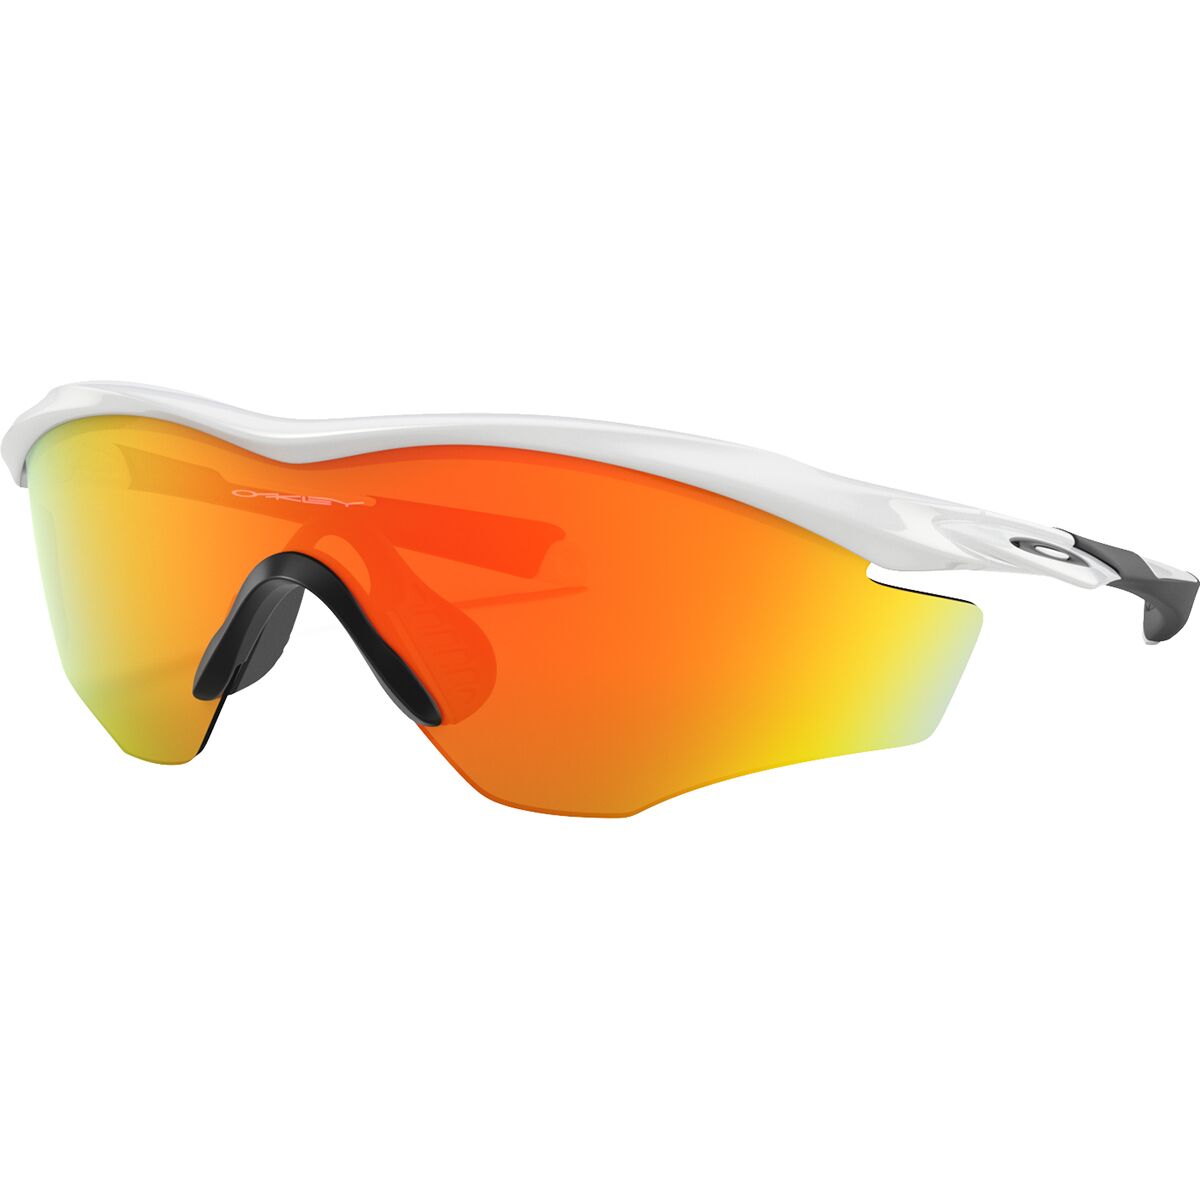 Oakley M2 Frame XL Sunglasses Polished White - Fire Iridium, One Size - Men's